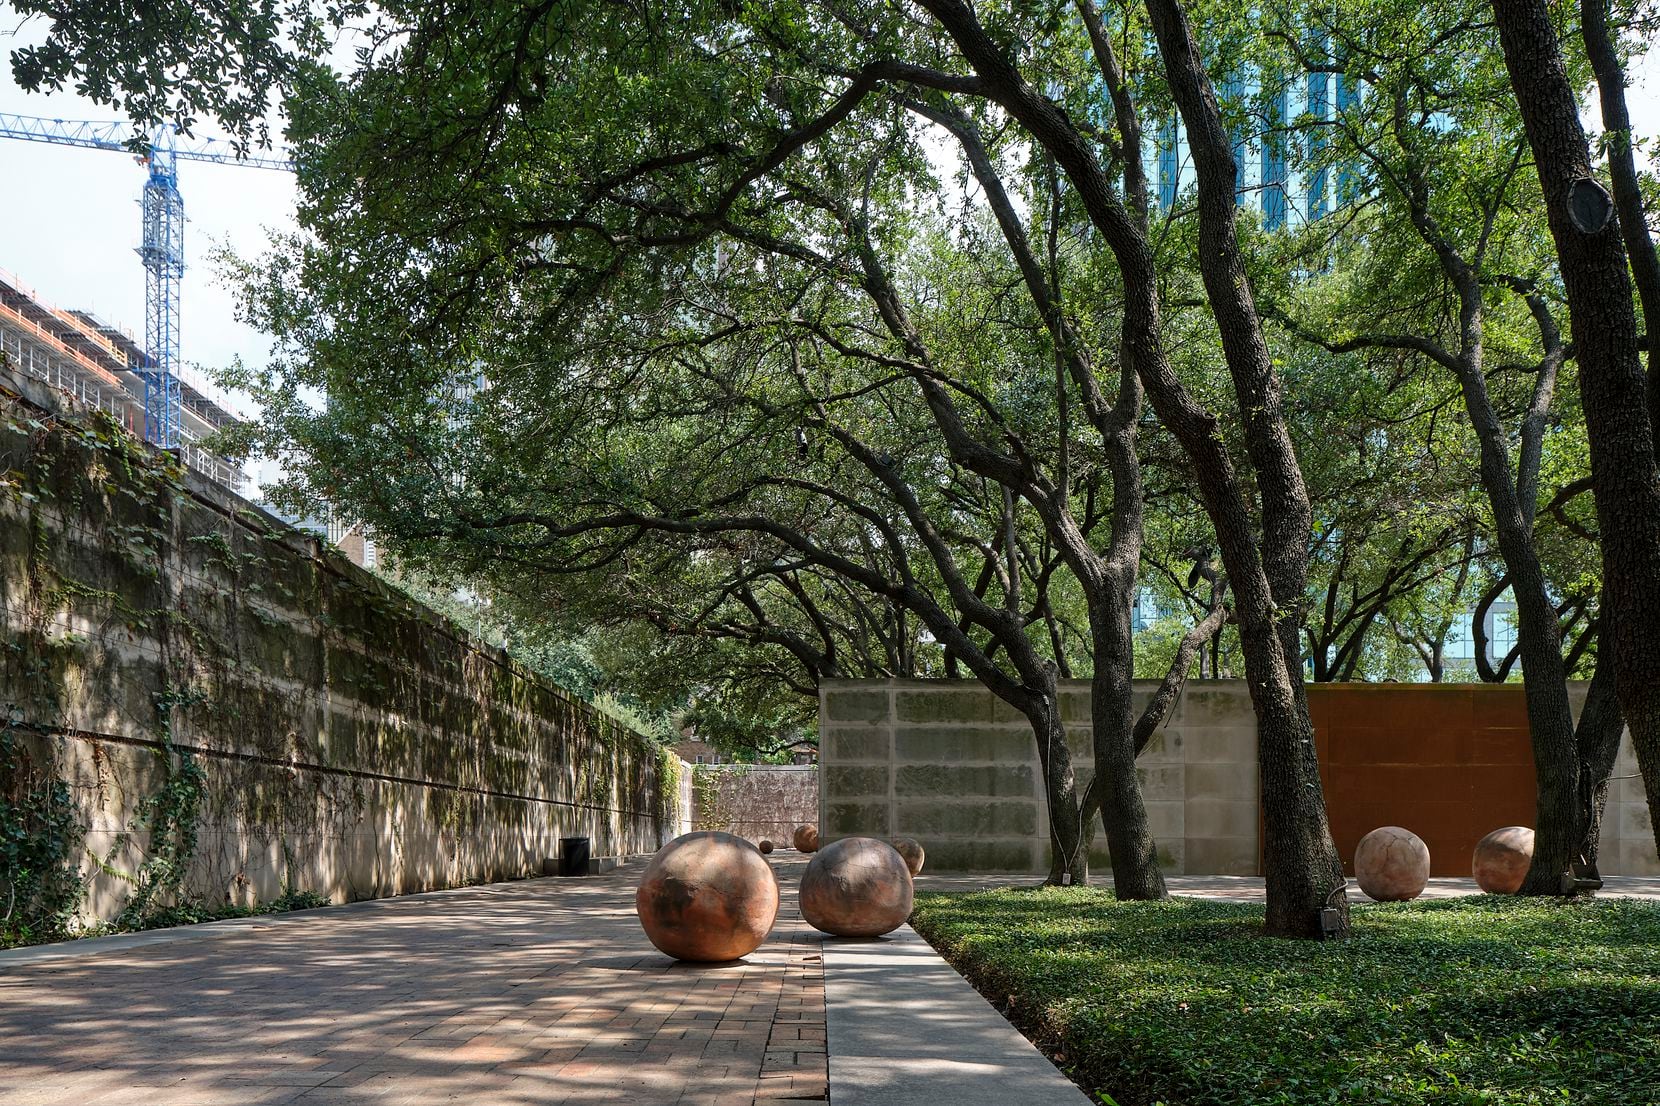 Jardín escultórico de DMA revivido con obras de terracota del artista mexicano Bosco Sodi